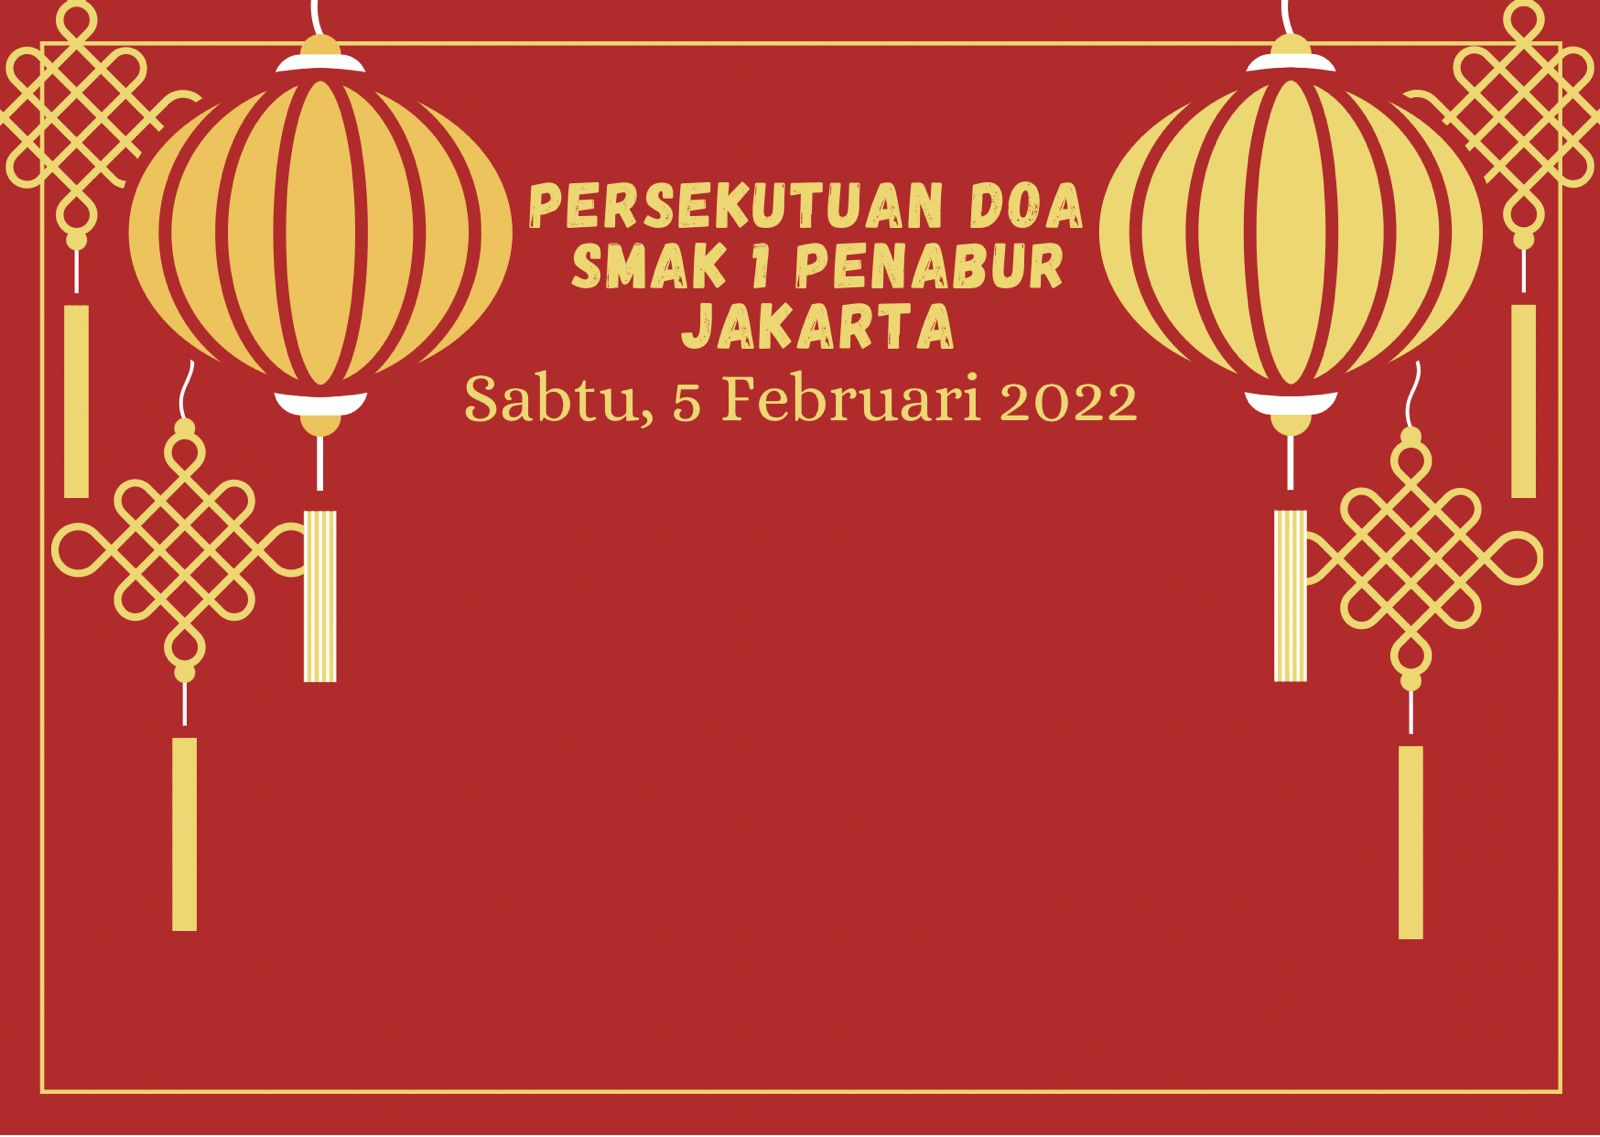 PERSEKUTUAN DOA SMAK 1 PENABUR JAKARTA 5 Februari 2022